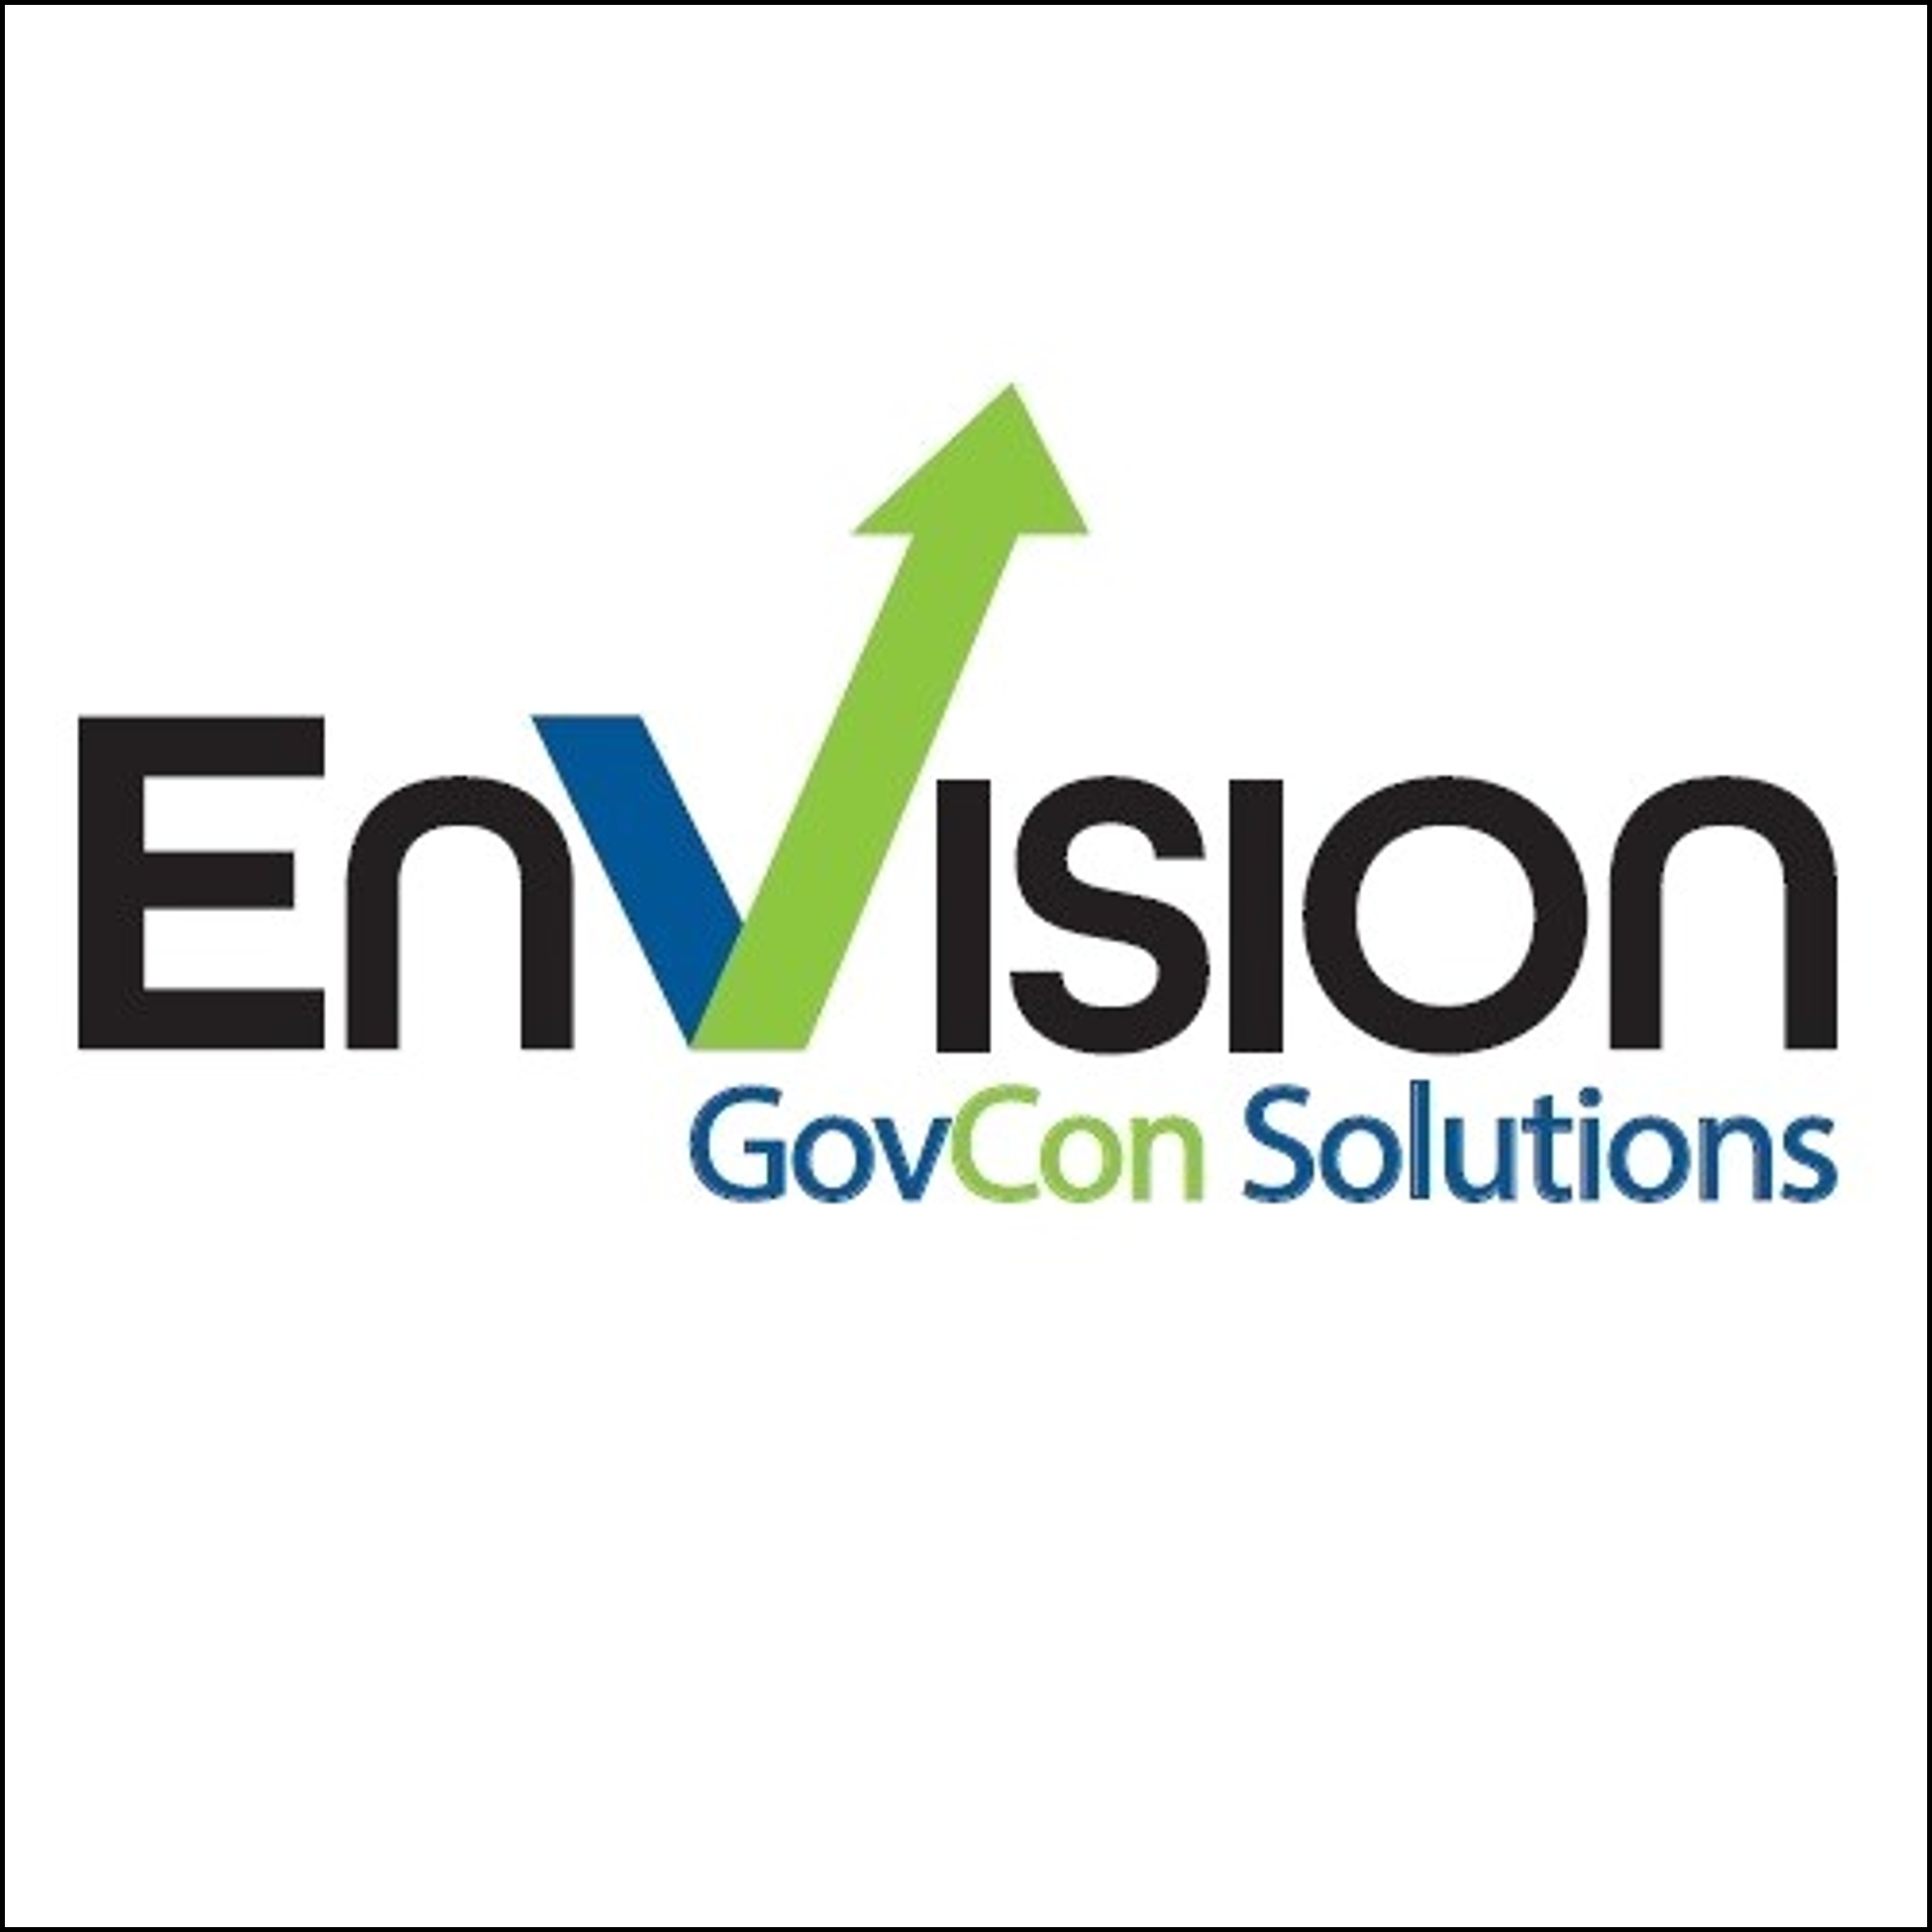 Envision GovCon Solutions logo